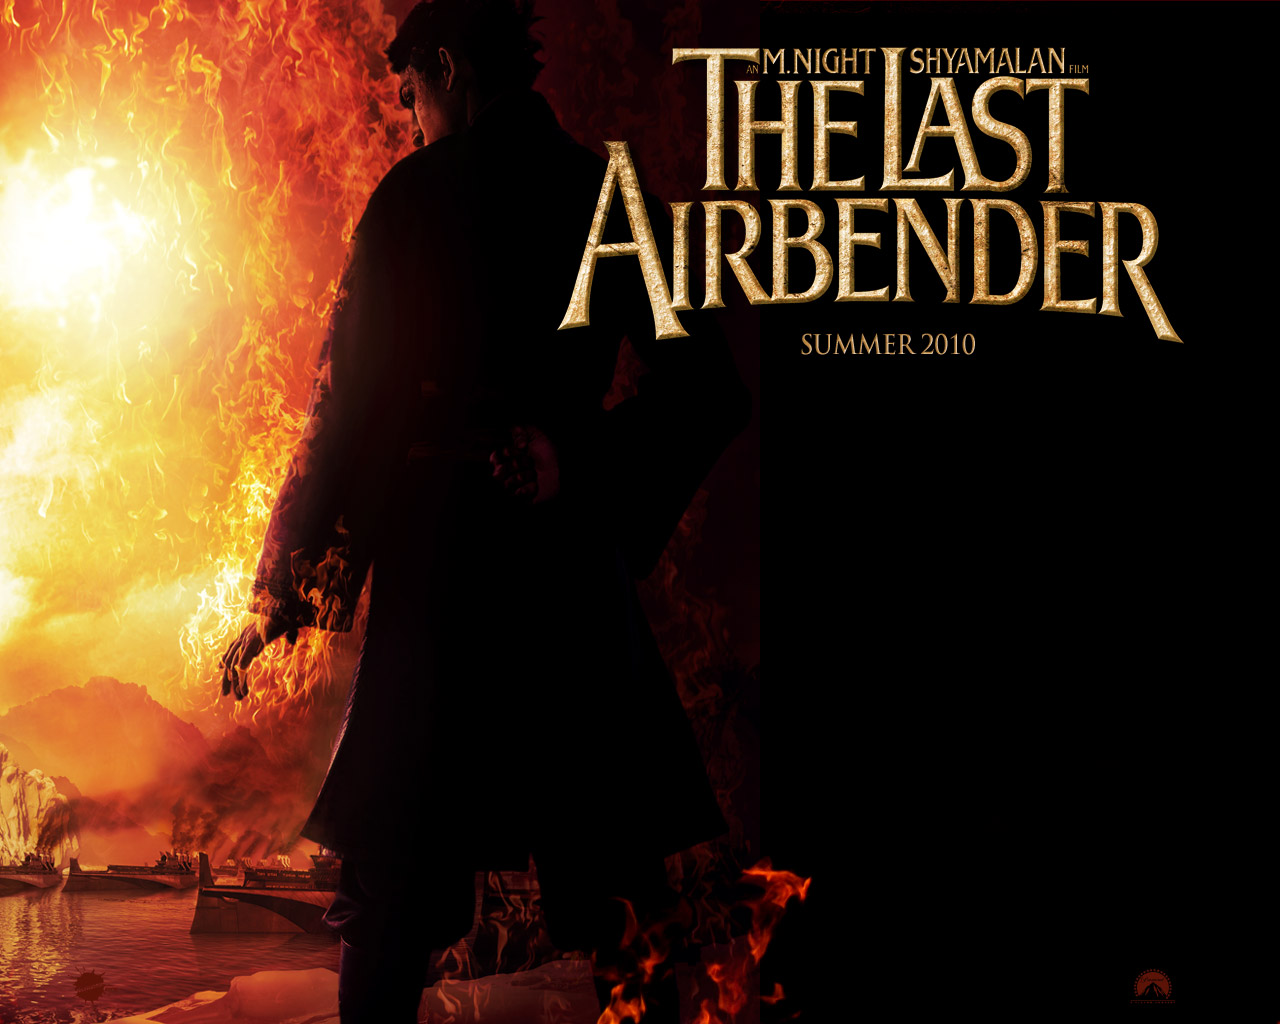 Download HQ Fire The Last Airbender wallpaper / 1280x1024